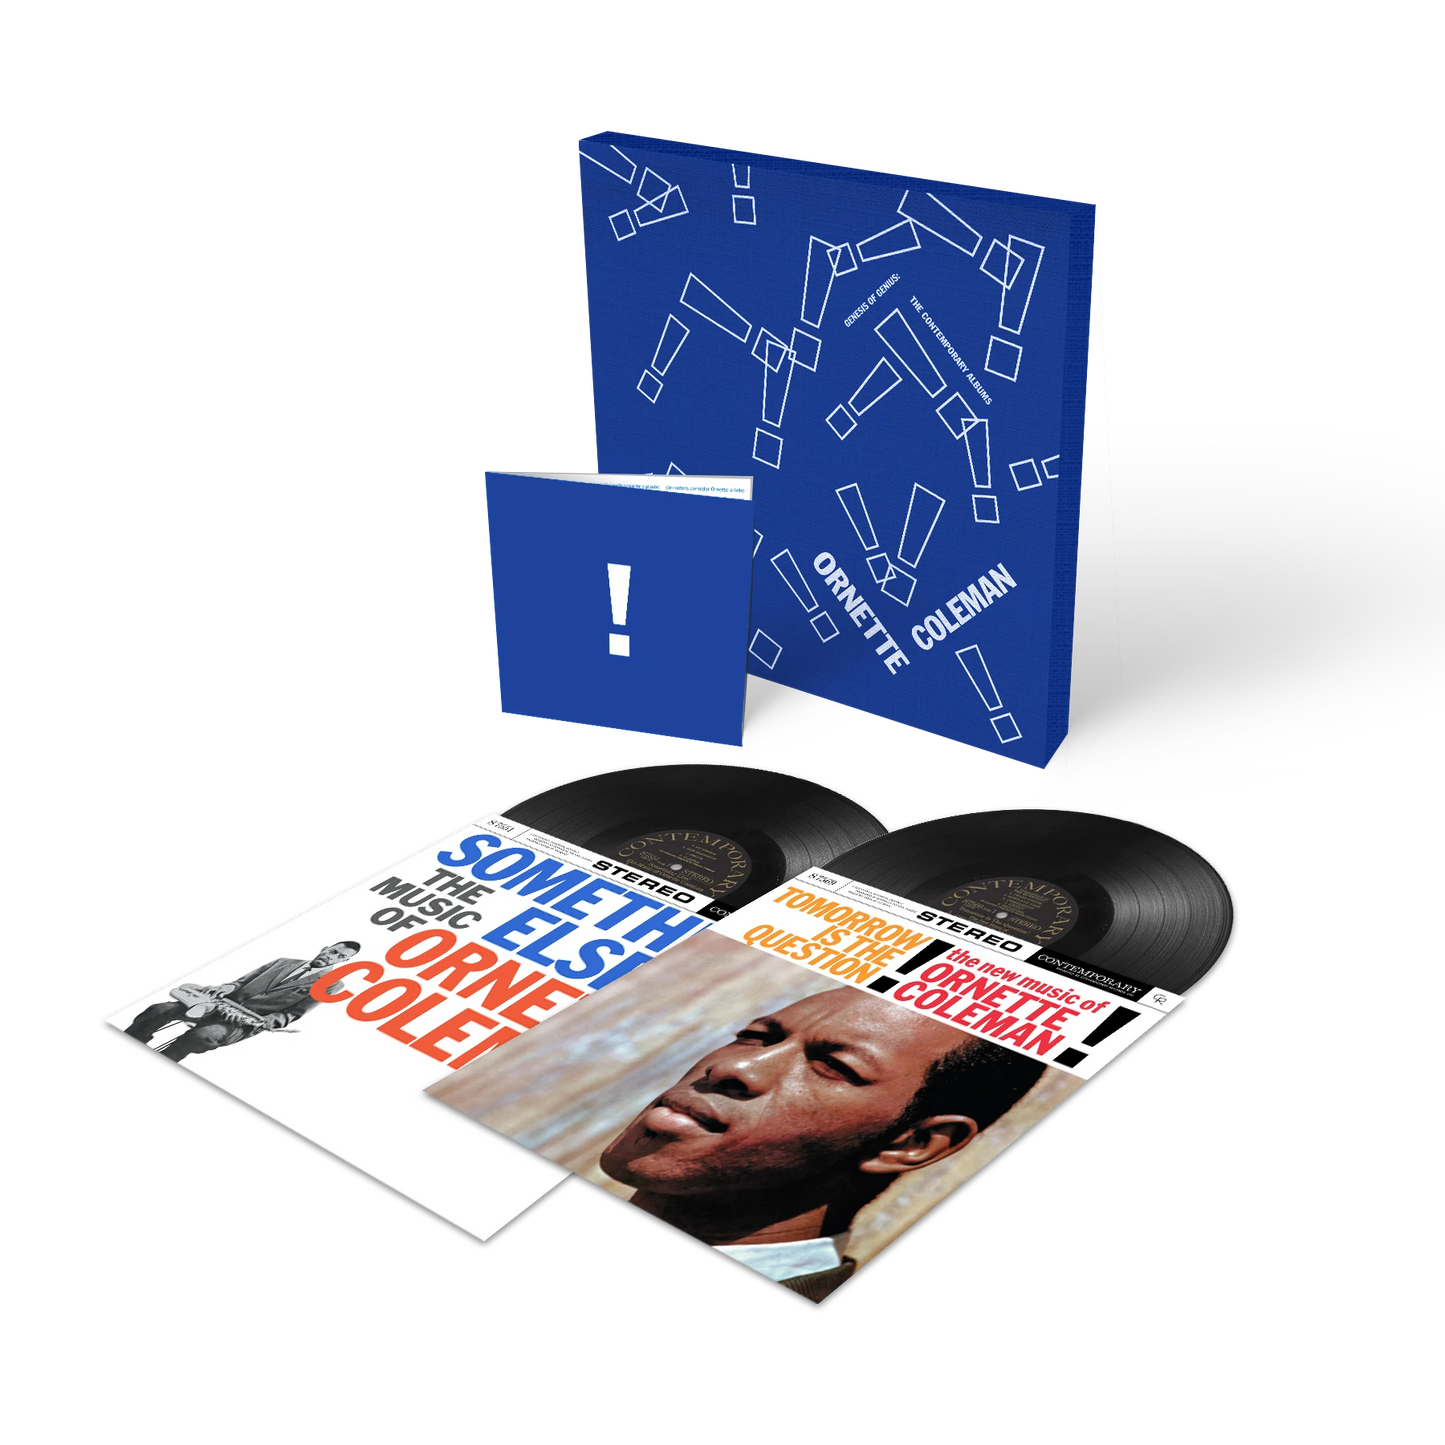 Ornette Coleman - "Genesis Of Genius: The Contemporary Albums" Box Set